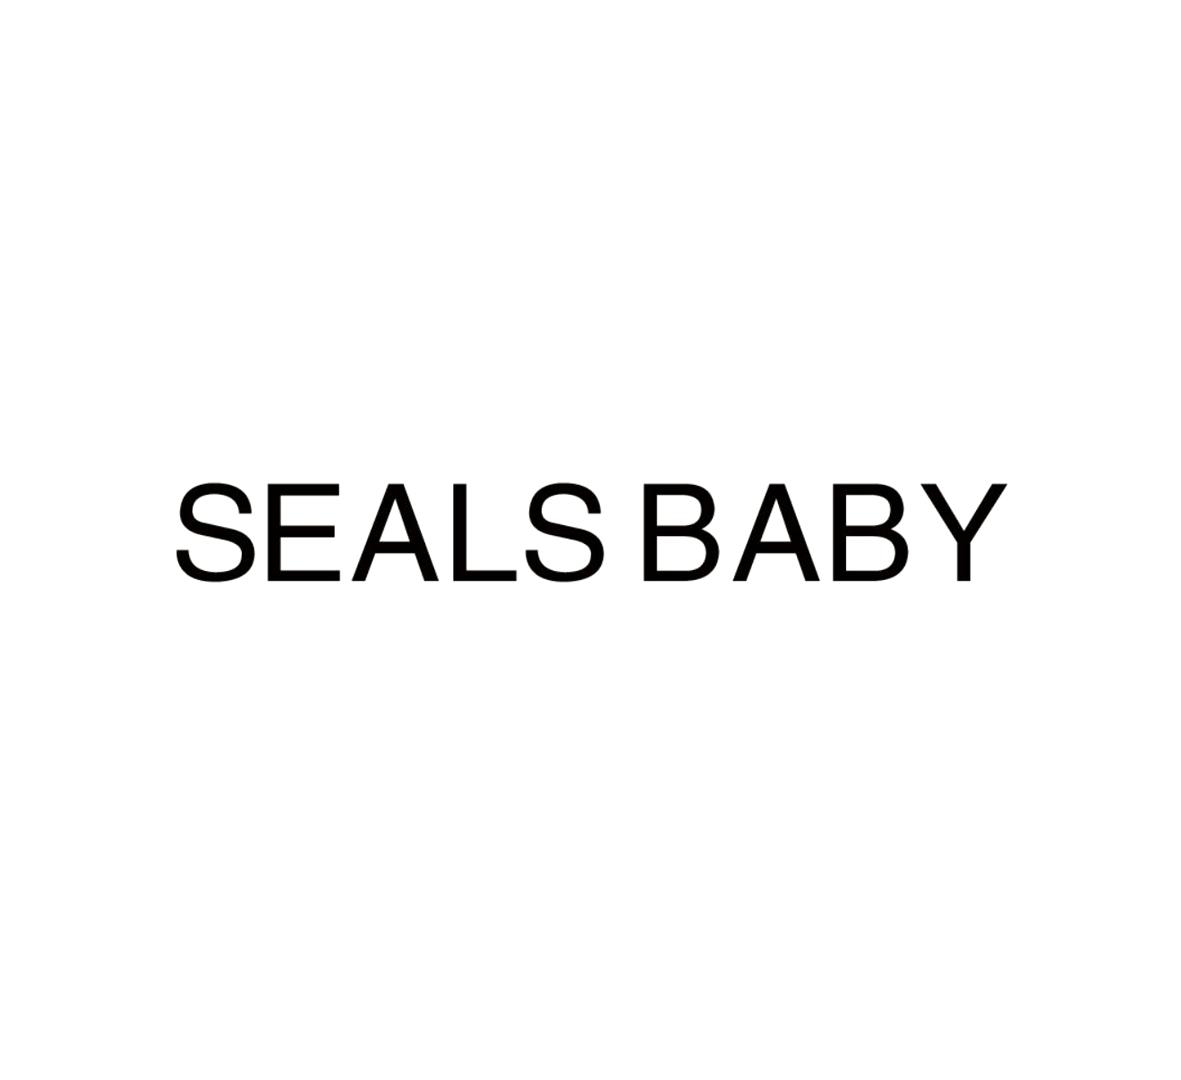 44类-医疗美容SEALS BABY商标转让